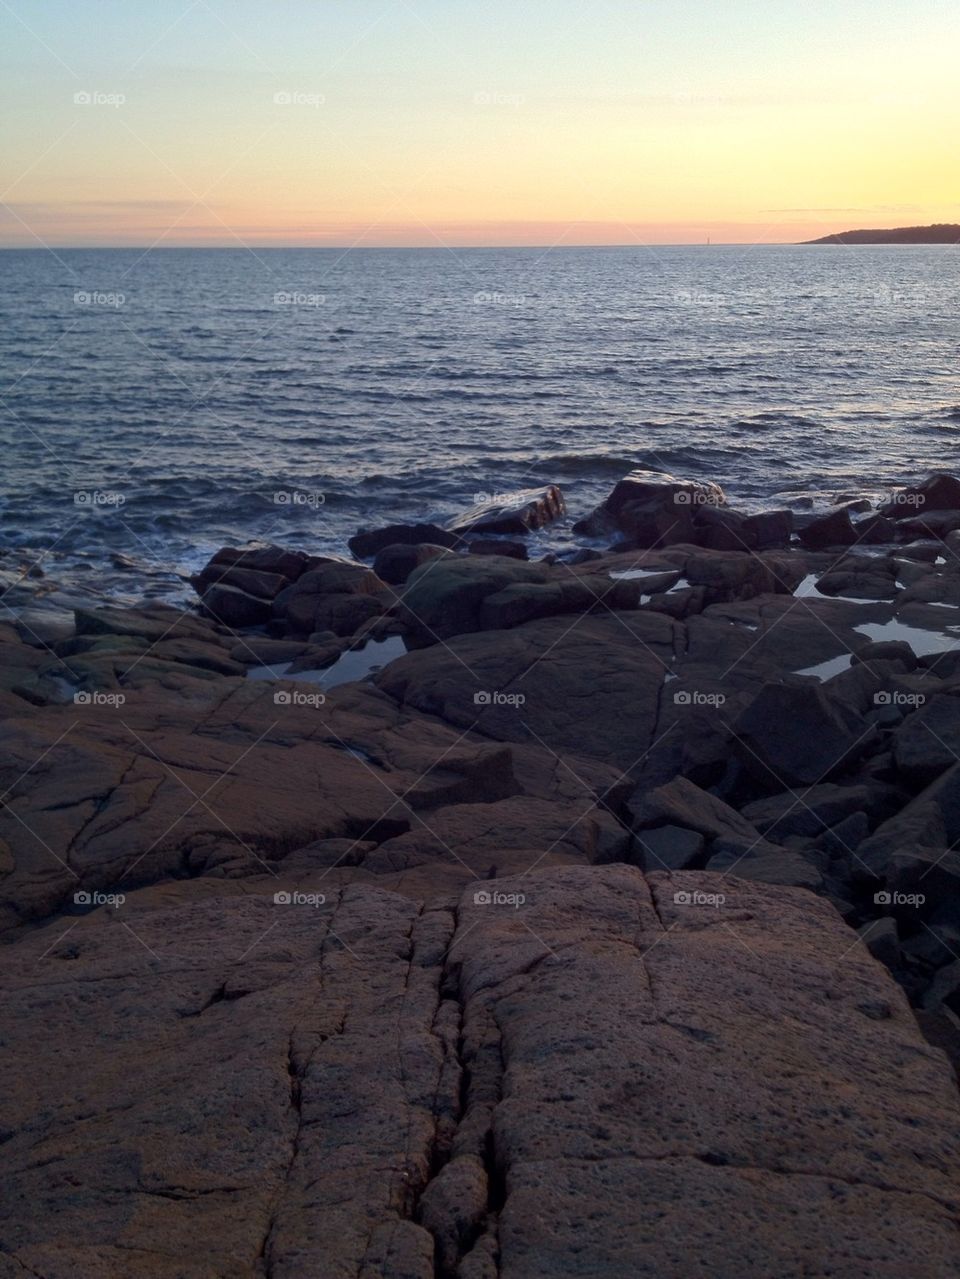 ocean sweden light sunset by marux92